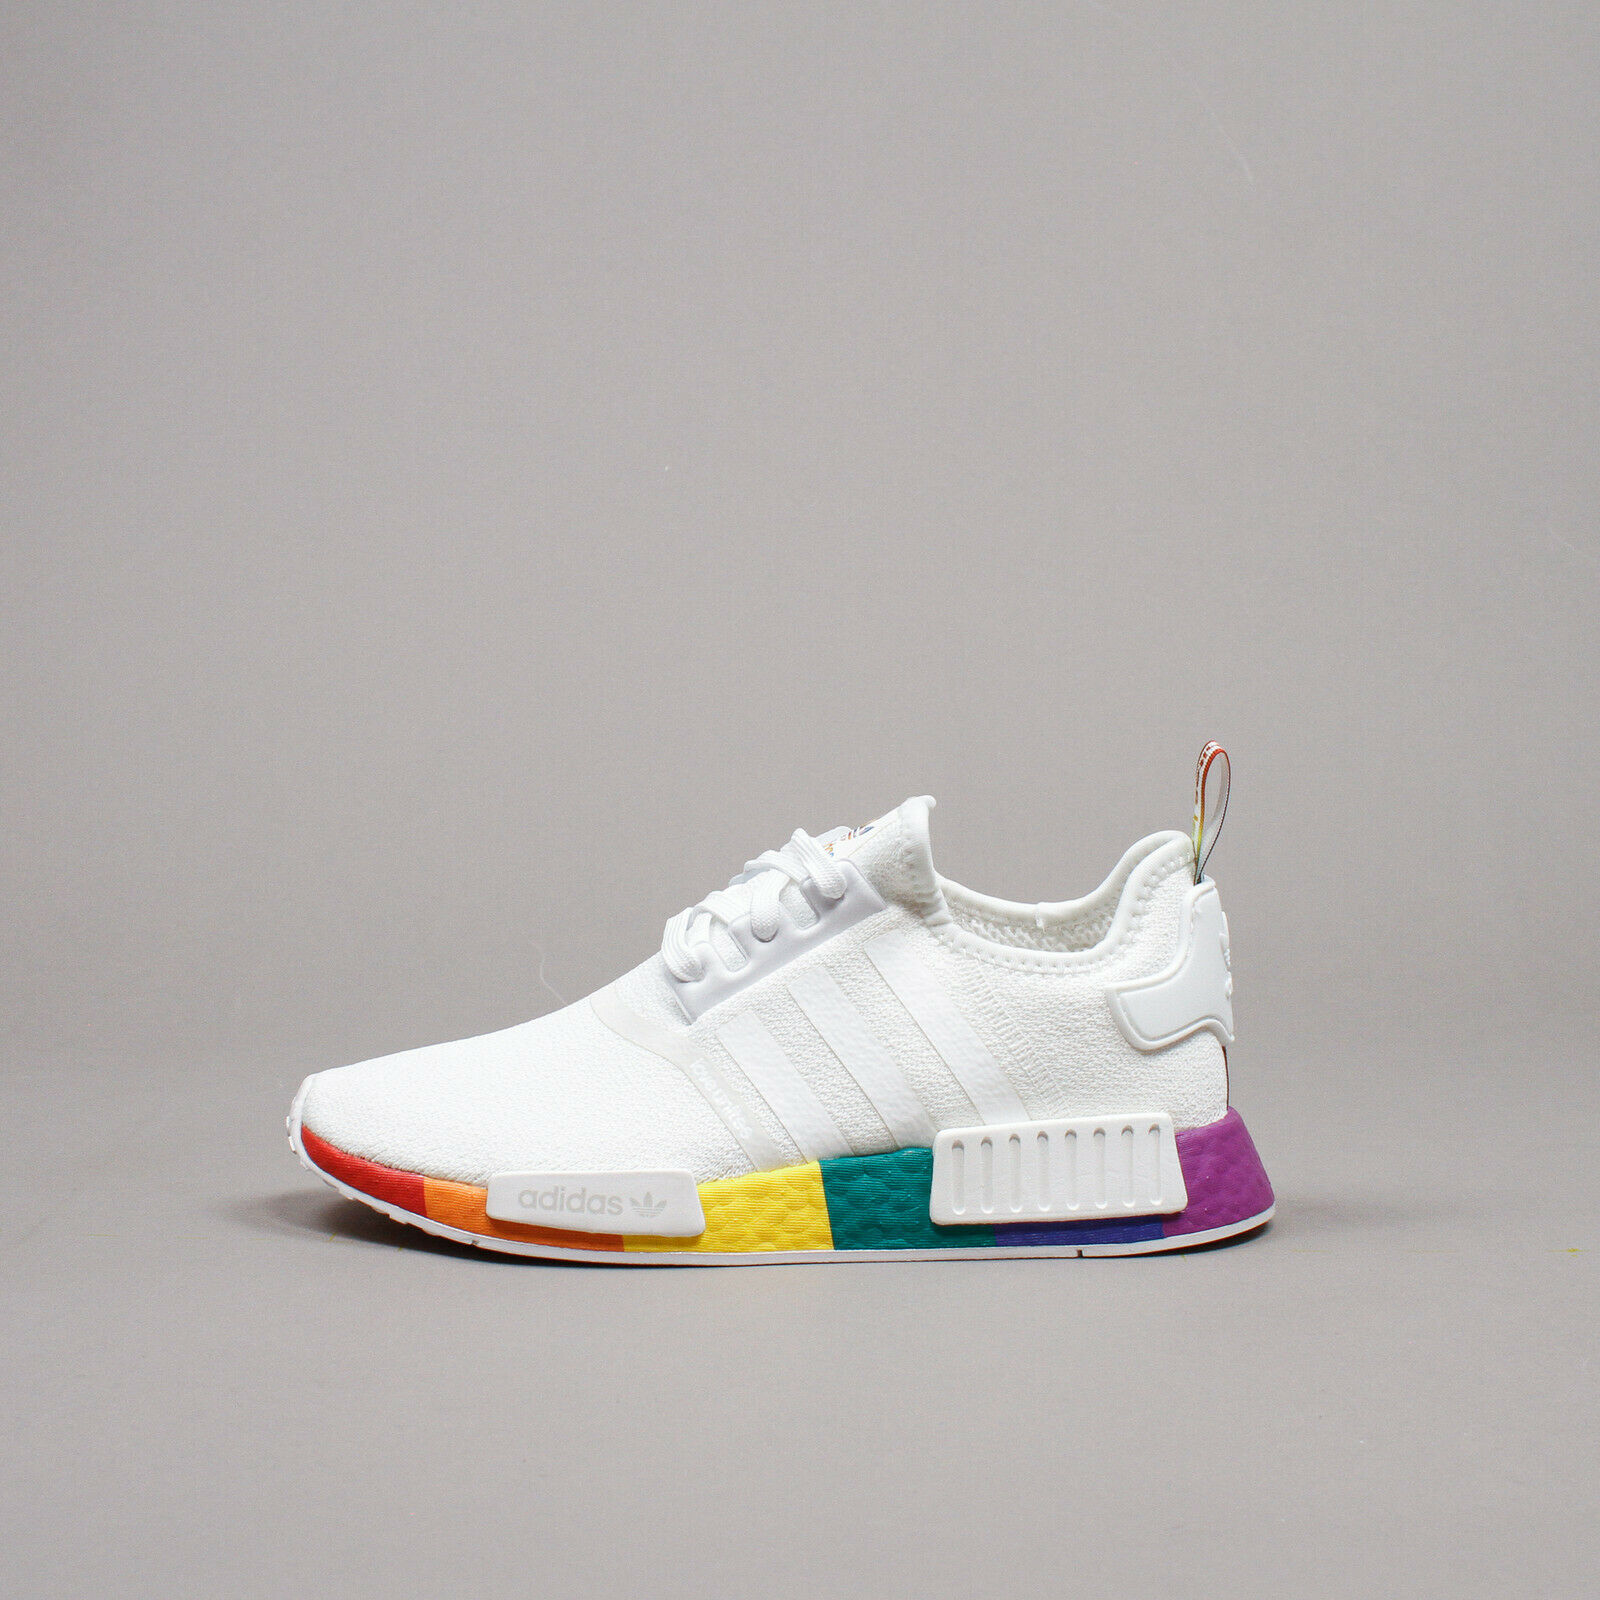 adidas nmd gay pride shoes